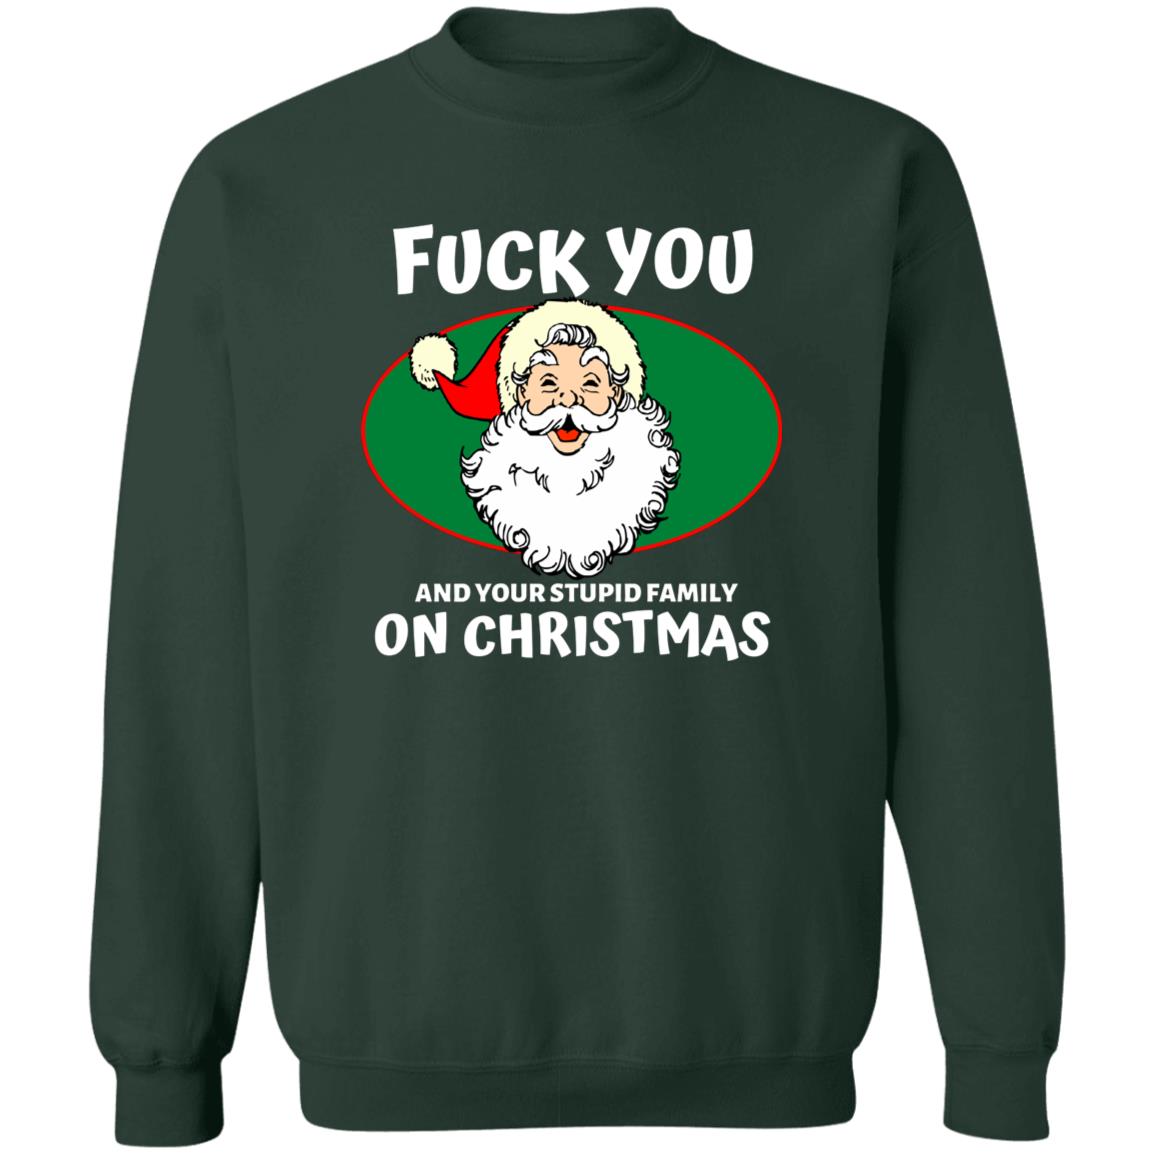 Anti-Social Christmas Shirt, Merry Christmas Shirt, Happy Holidays Shirt, Punk Rock Offensive Christmas Shirt Bad Santa Claus shirt